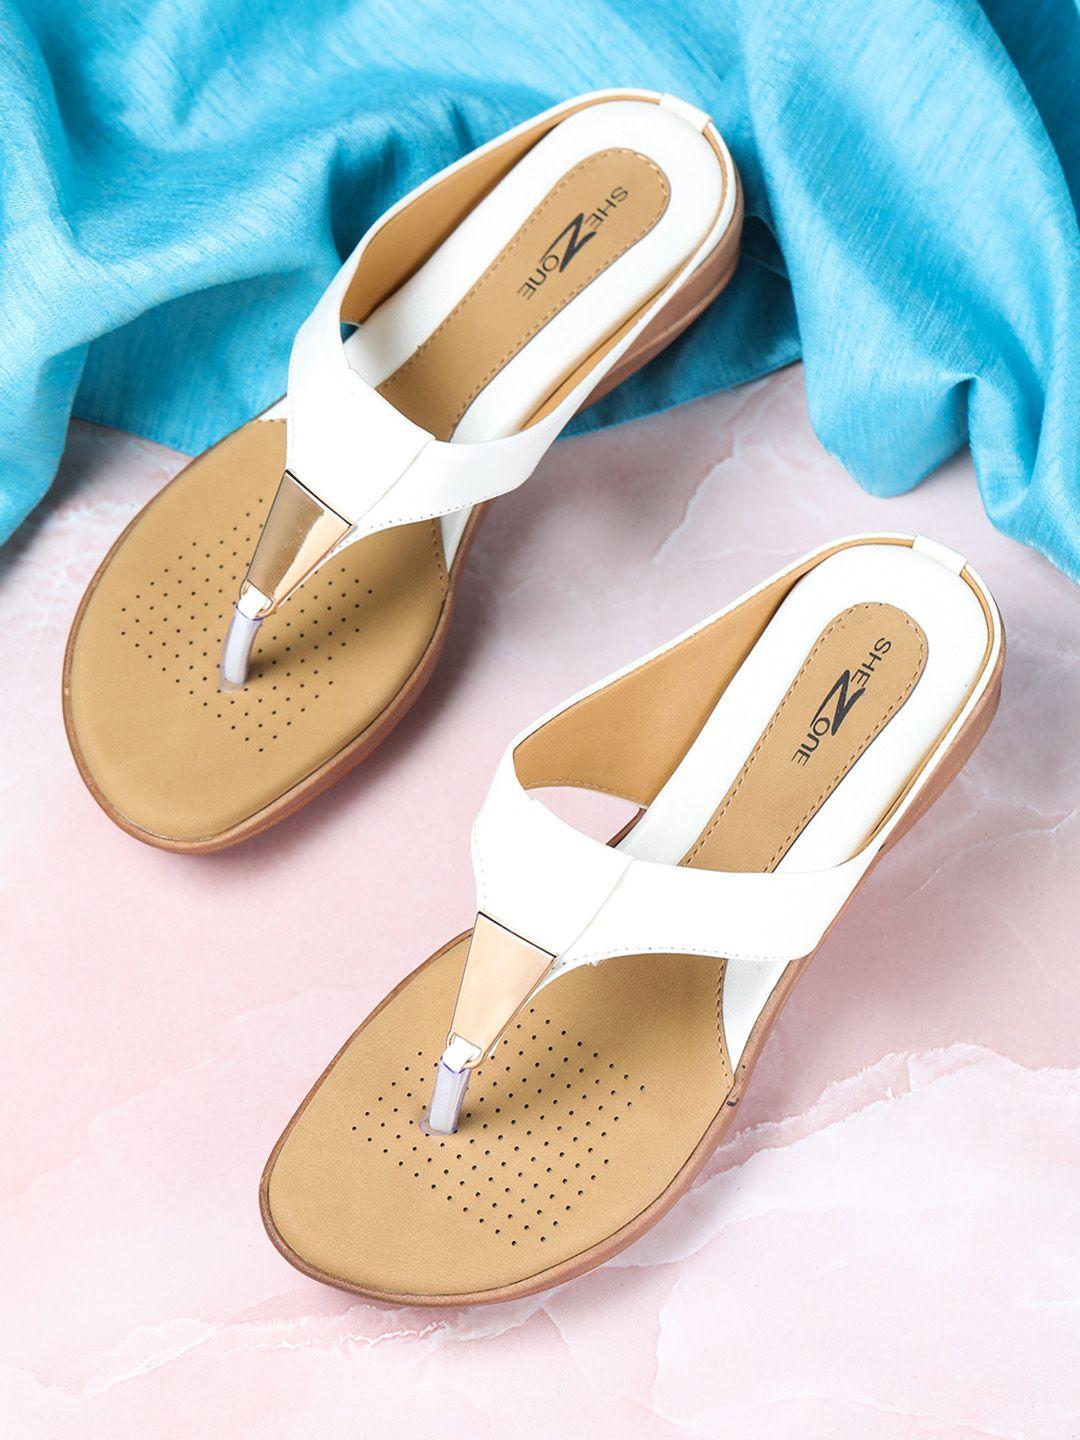 shezone white wedge sandals